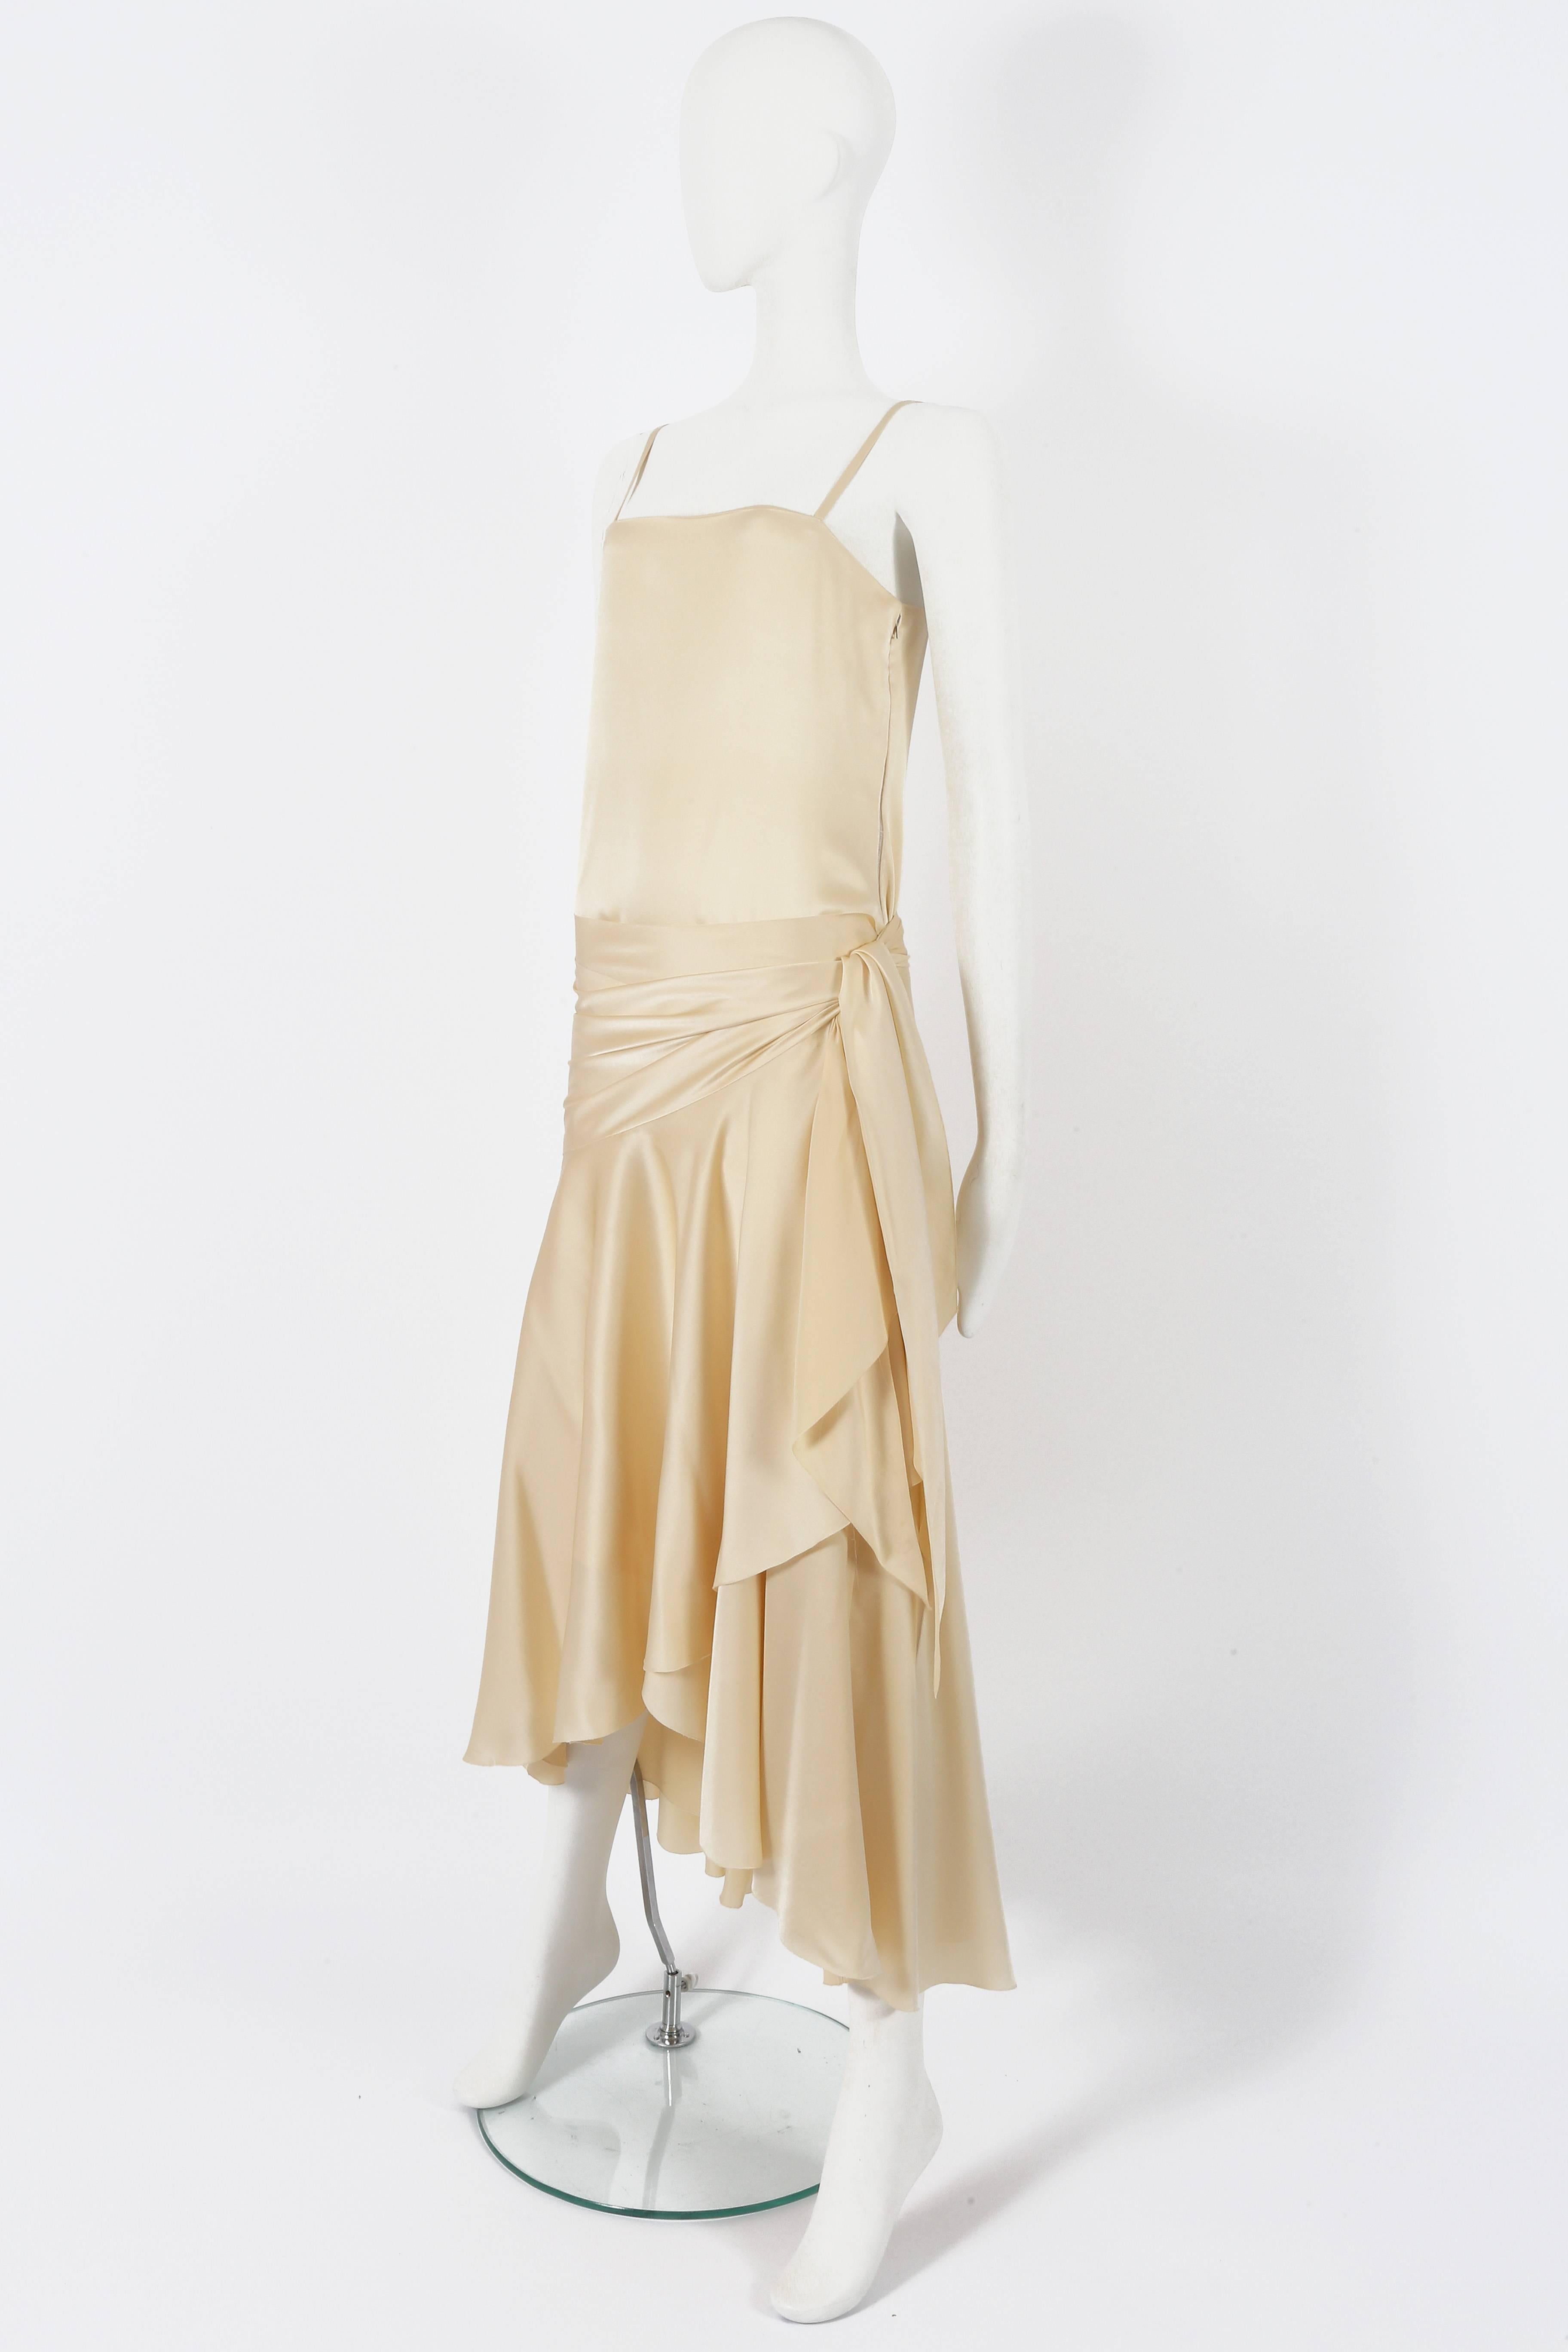 Beige Christian Dior Haute Couture Ivory Silk Evening Dress, circa 1978